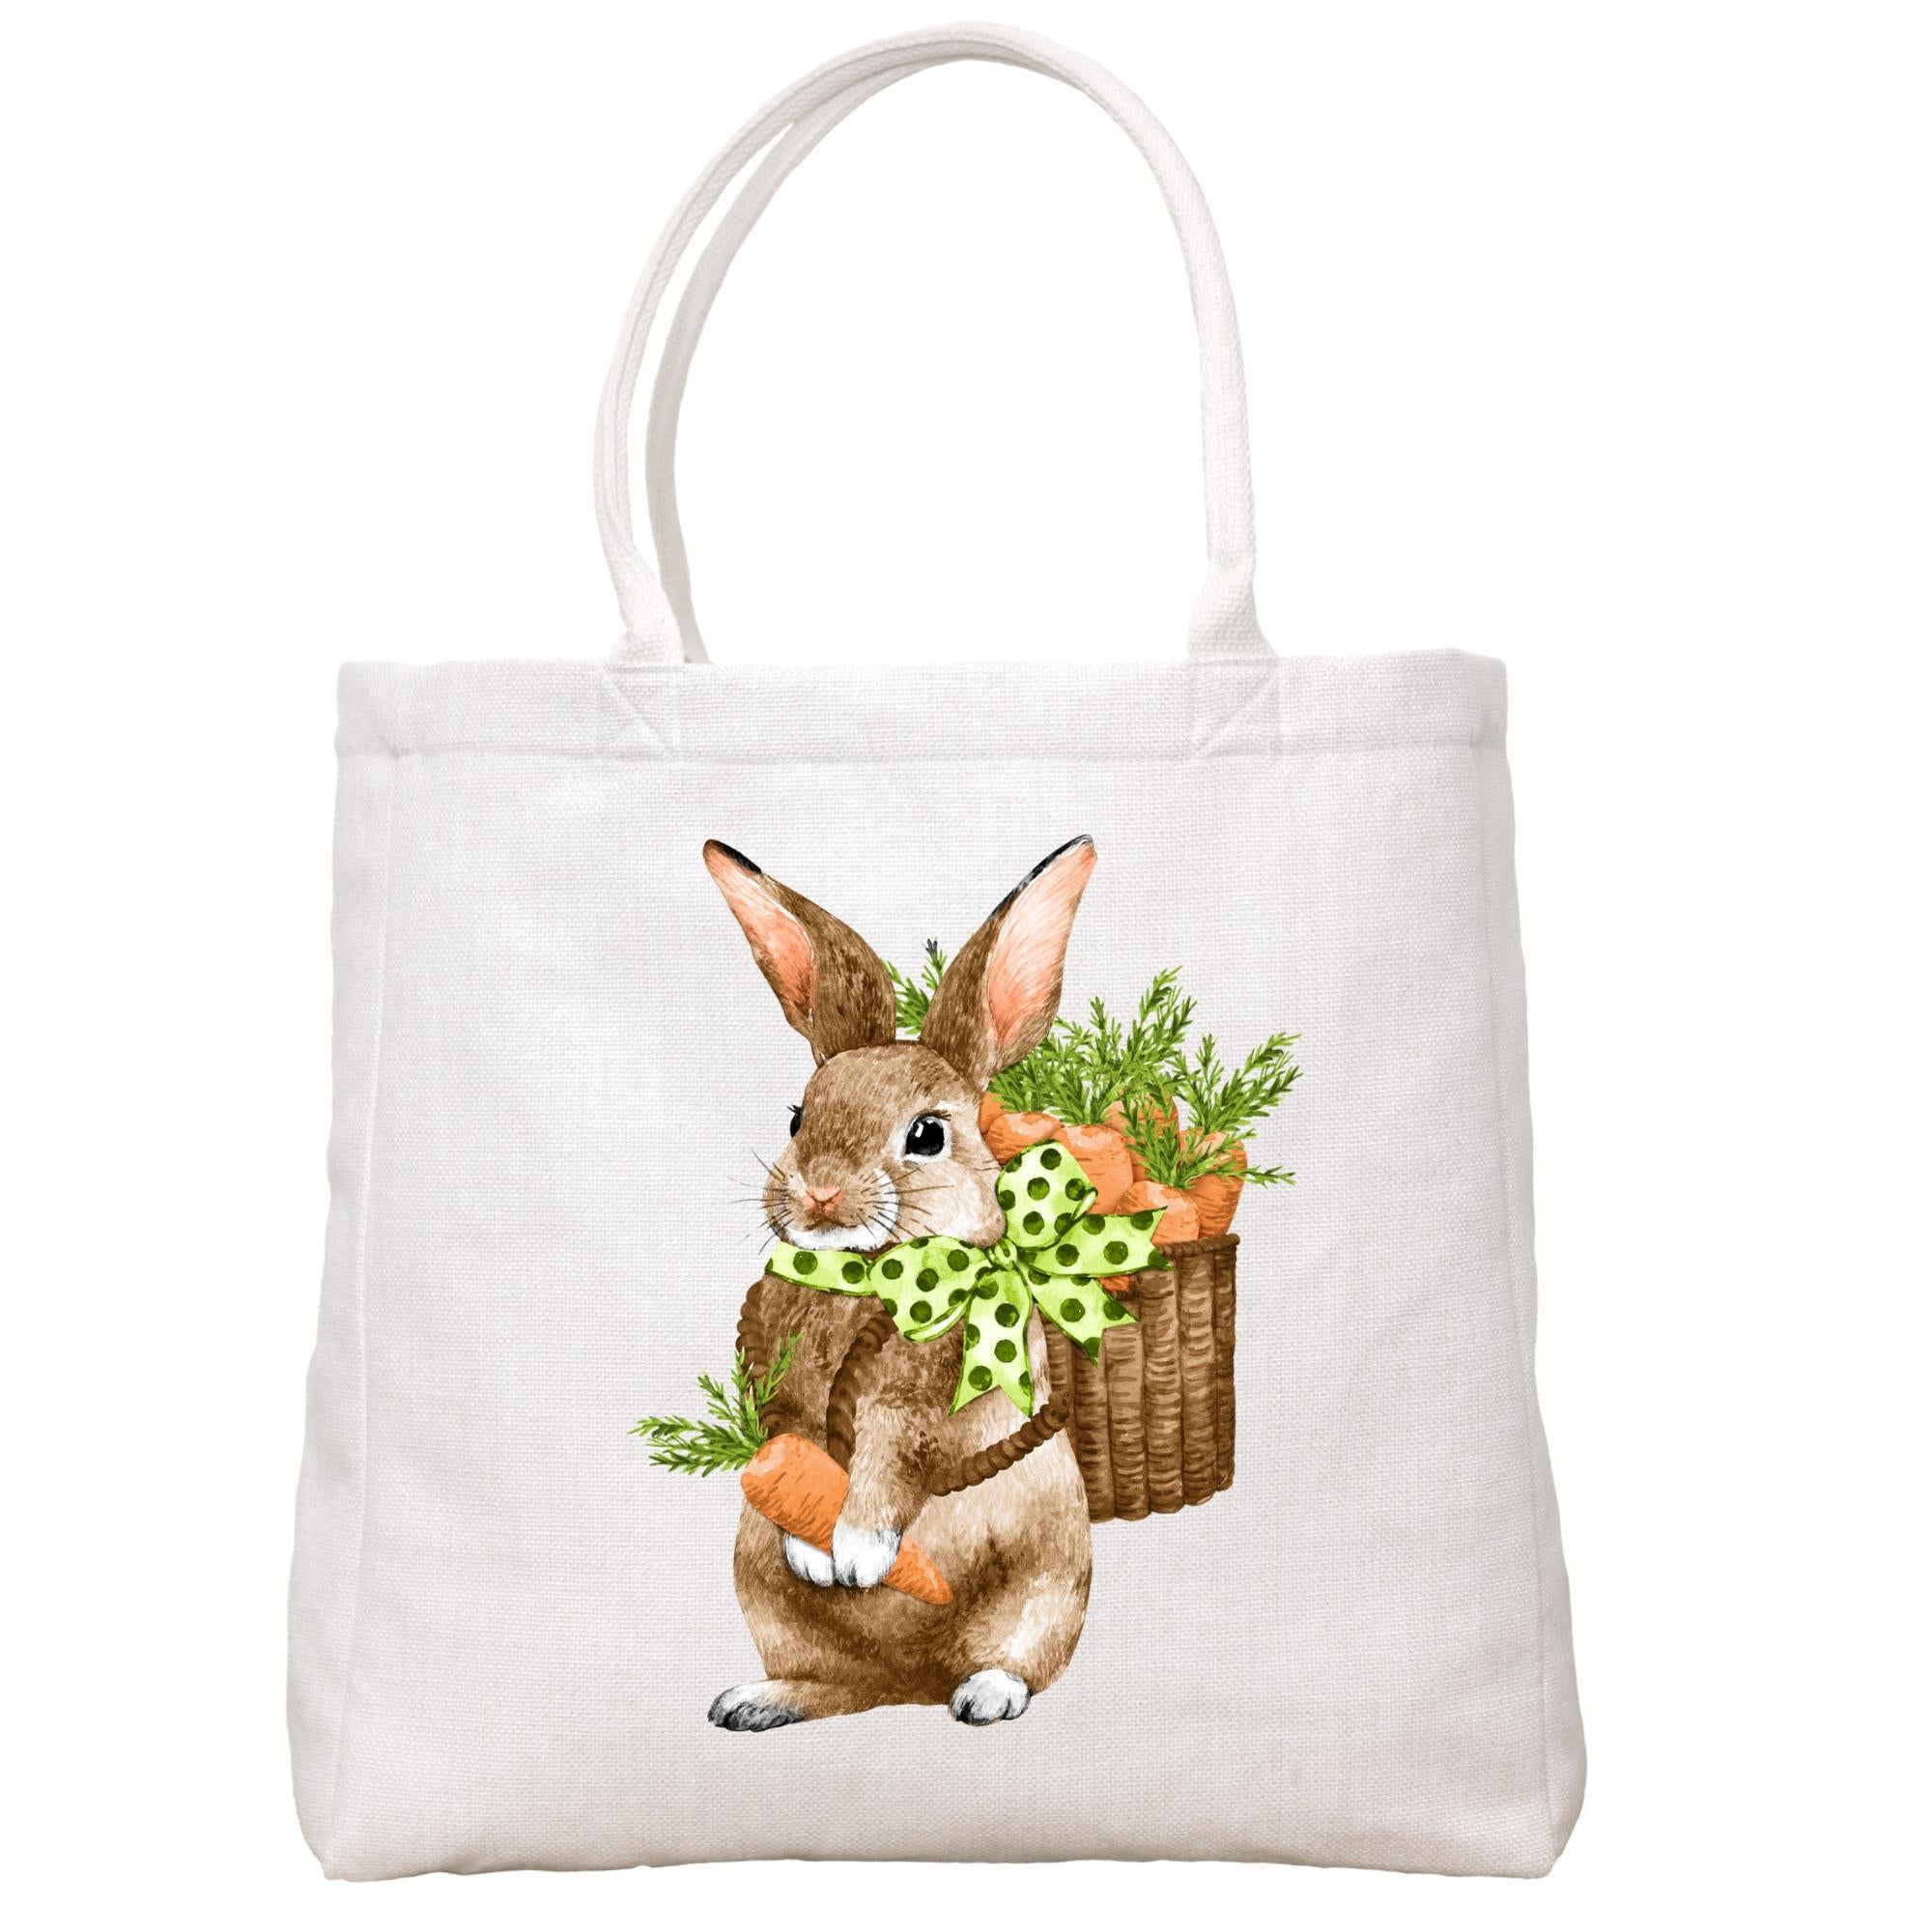 Bunny and Carrots Tote Bag Tote Bag - Southern Sisters